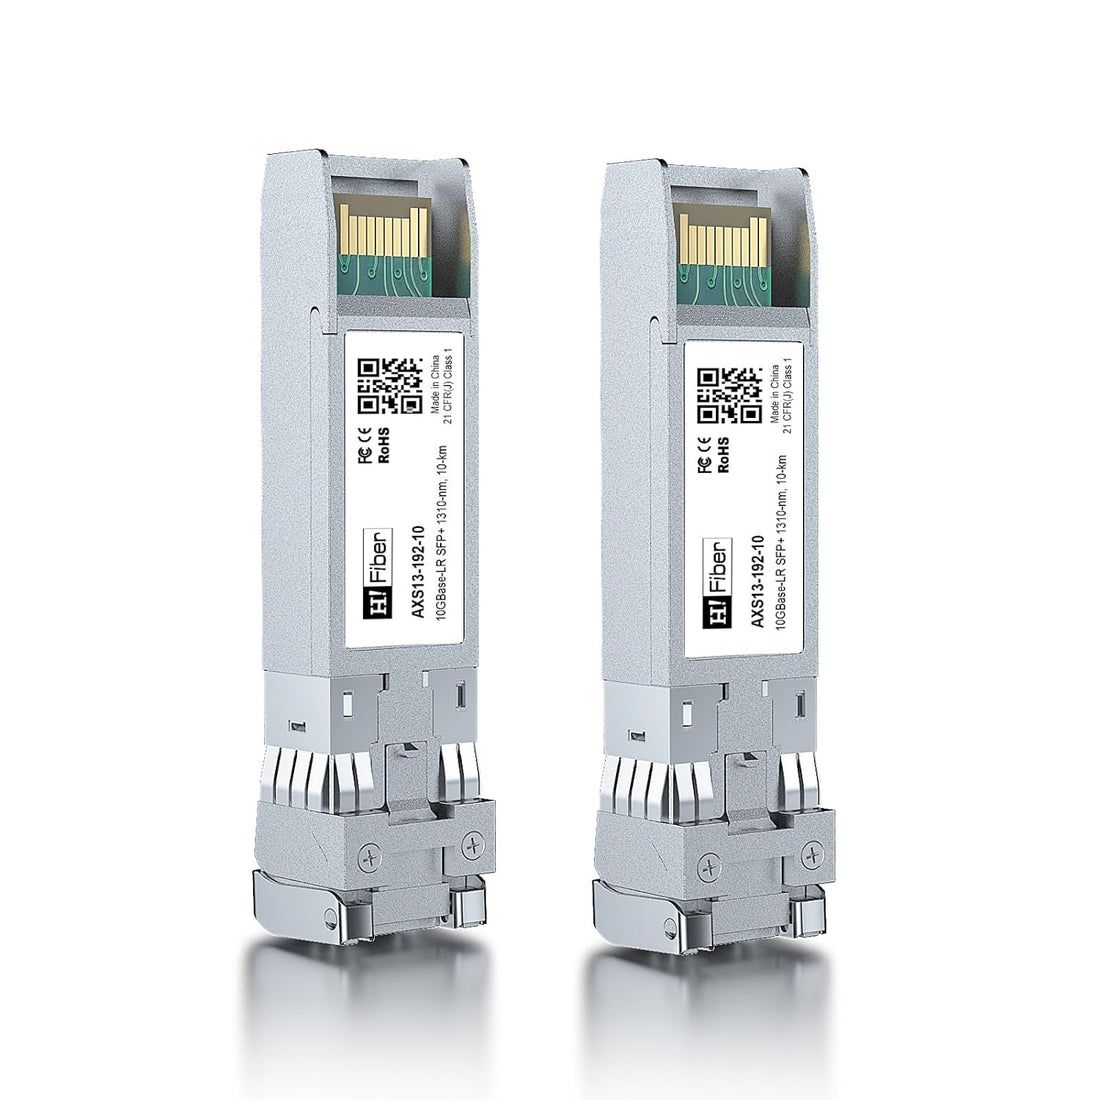 10G Single Mode SFP+ LC Module, 10GBase-LR Fiber Transceiver for Cisco SFP-10G-LR, Meraki MA-SFP-10GB-LR, Ubiquiti UniFi UF-SM-10G, Mikrotik, Netgear, D-Link and More (SMF,1310nm,10km,DDM) 2 Pack